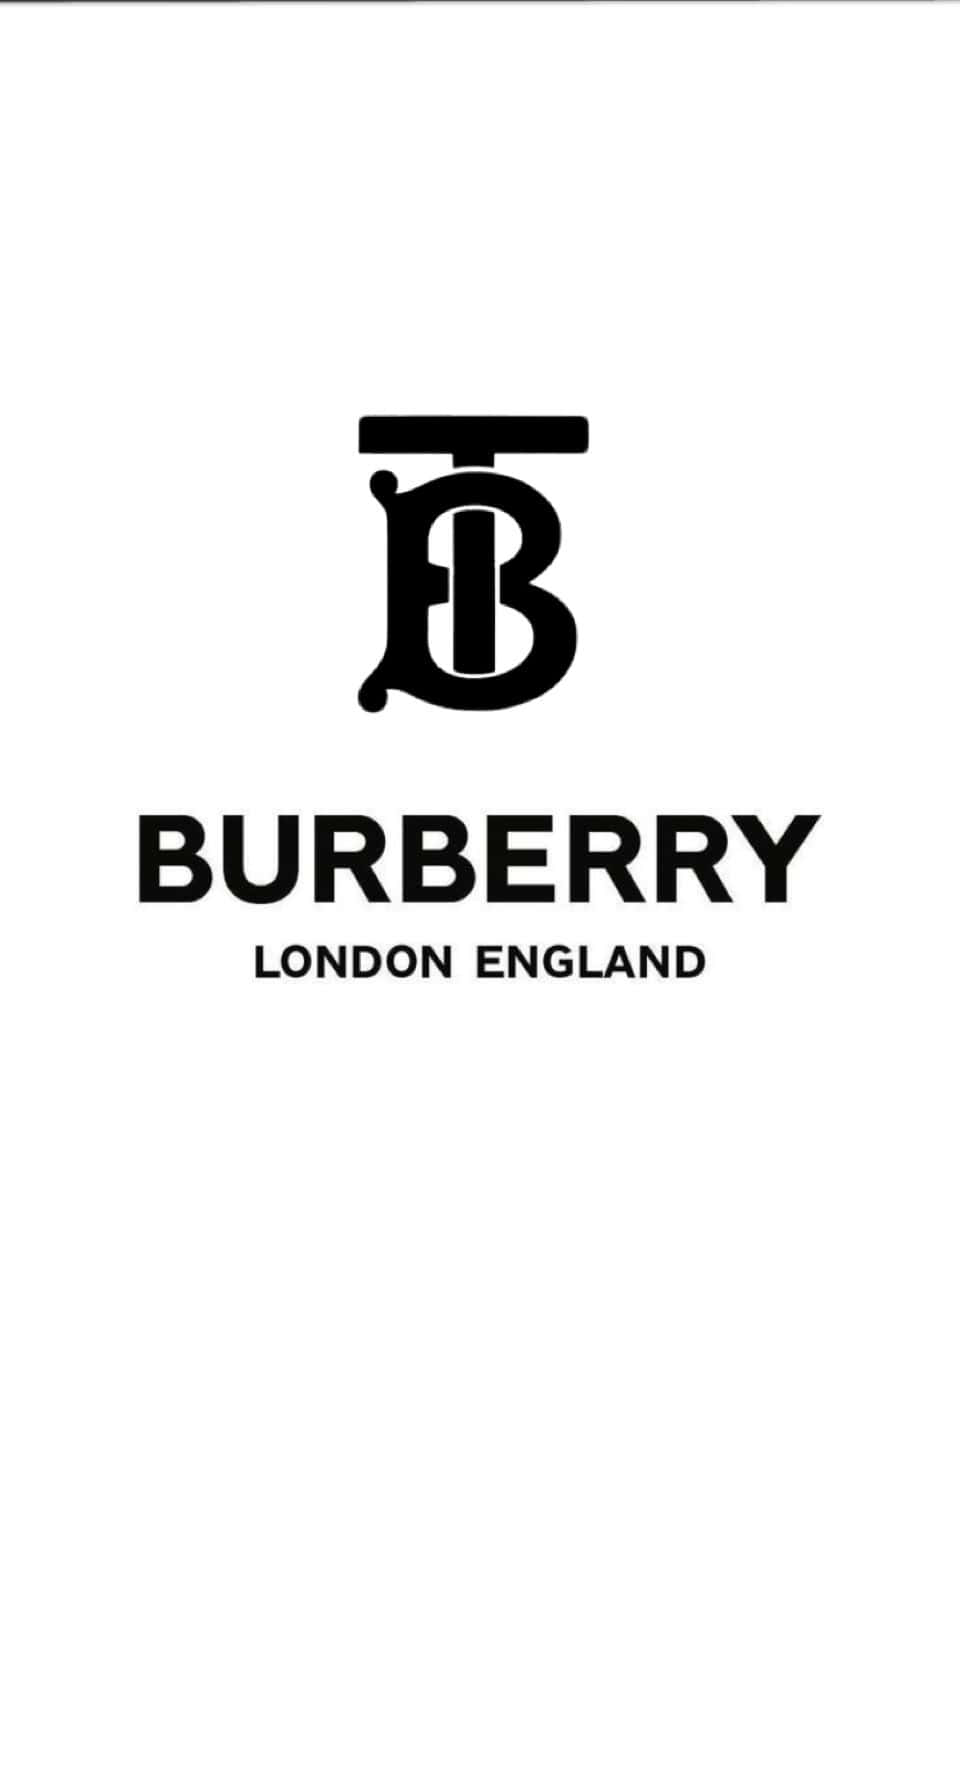 Logotipode Burberry En Londres, Inglaterra